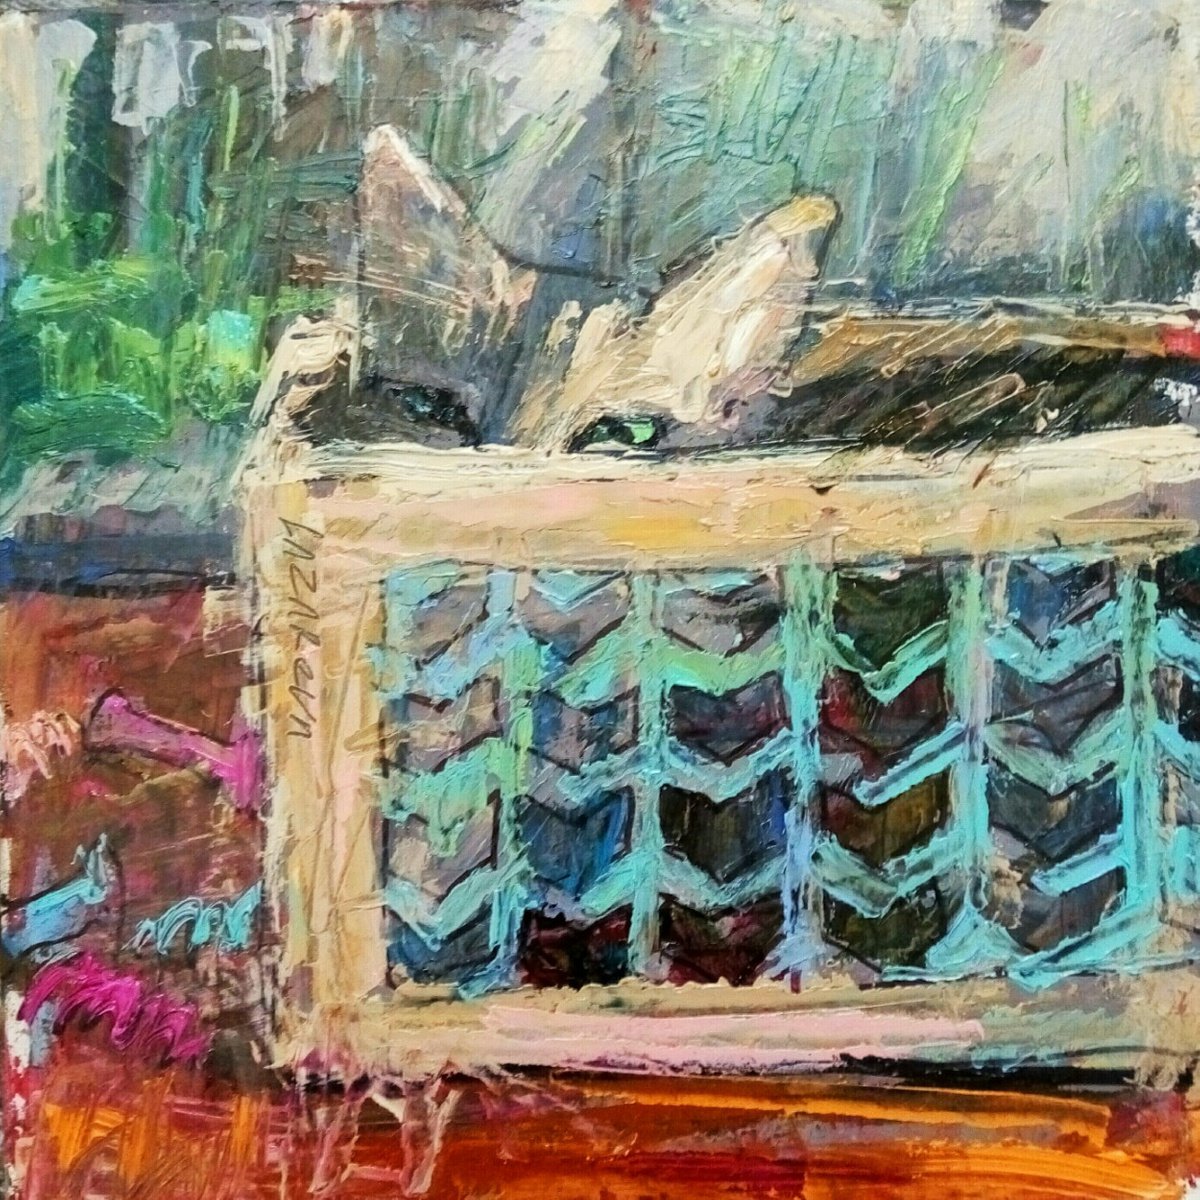 Cat in a box by Valerie Lazareva